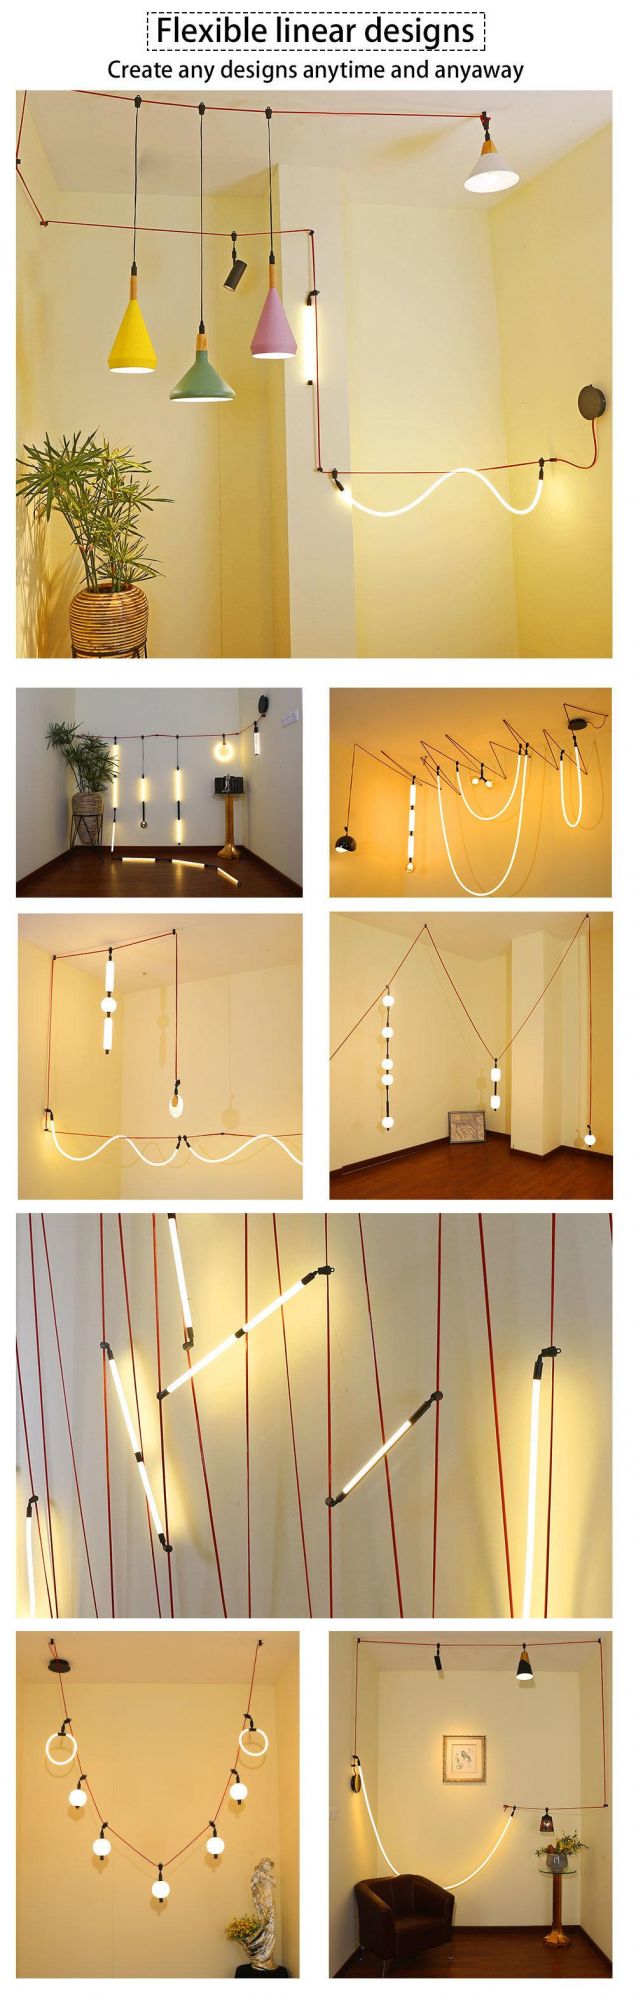 LED Indoor Designer Flexible Linear 3000K/6000K Glass Acrylic Shade Decoration Chandelier Pendant Ceiling Spot Track Lamp Light